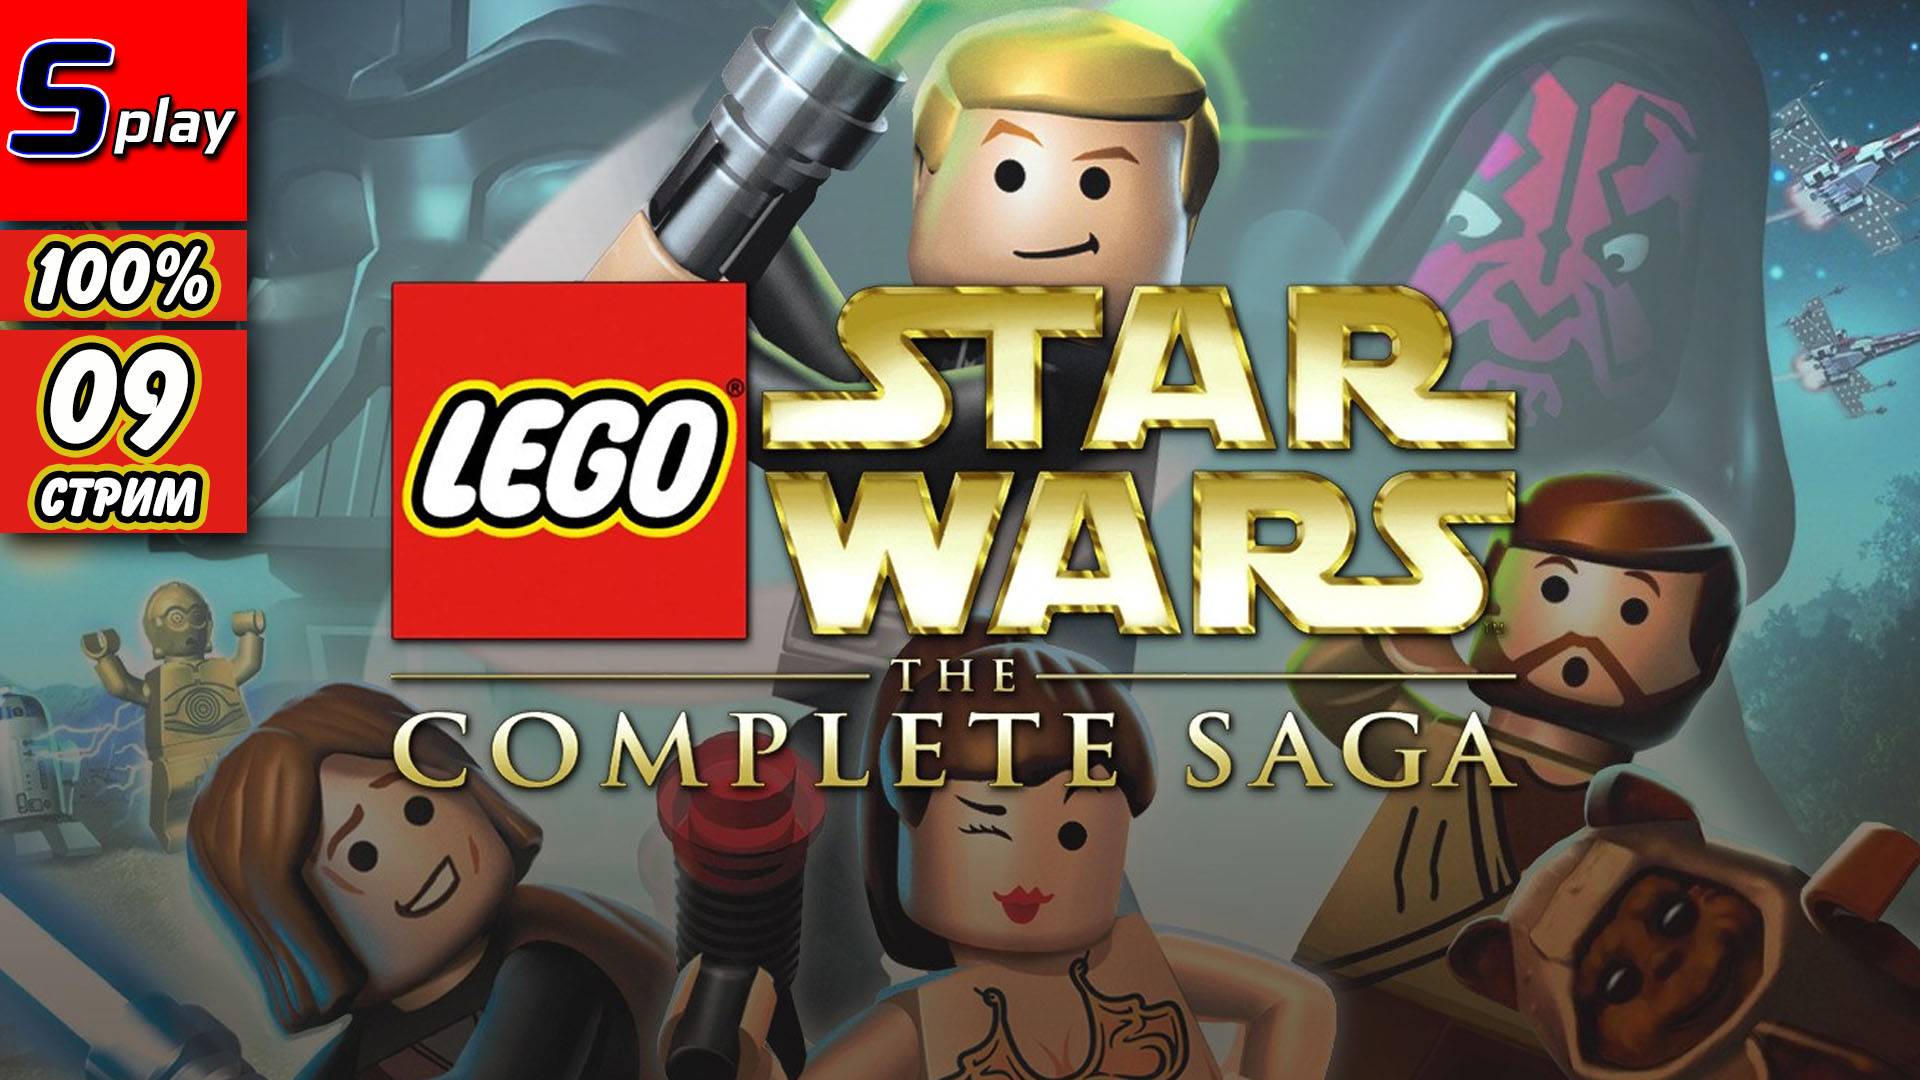 Lego Star Wars The Complete Saga на 100% - [09-стрим] - Собирательство